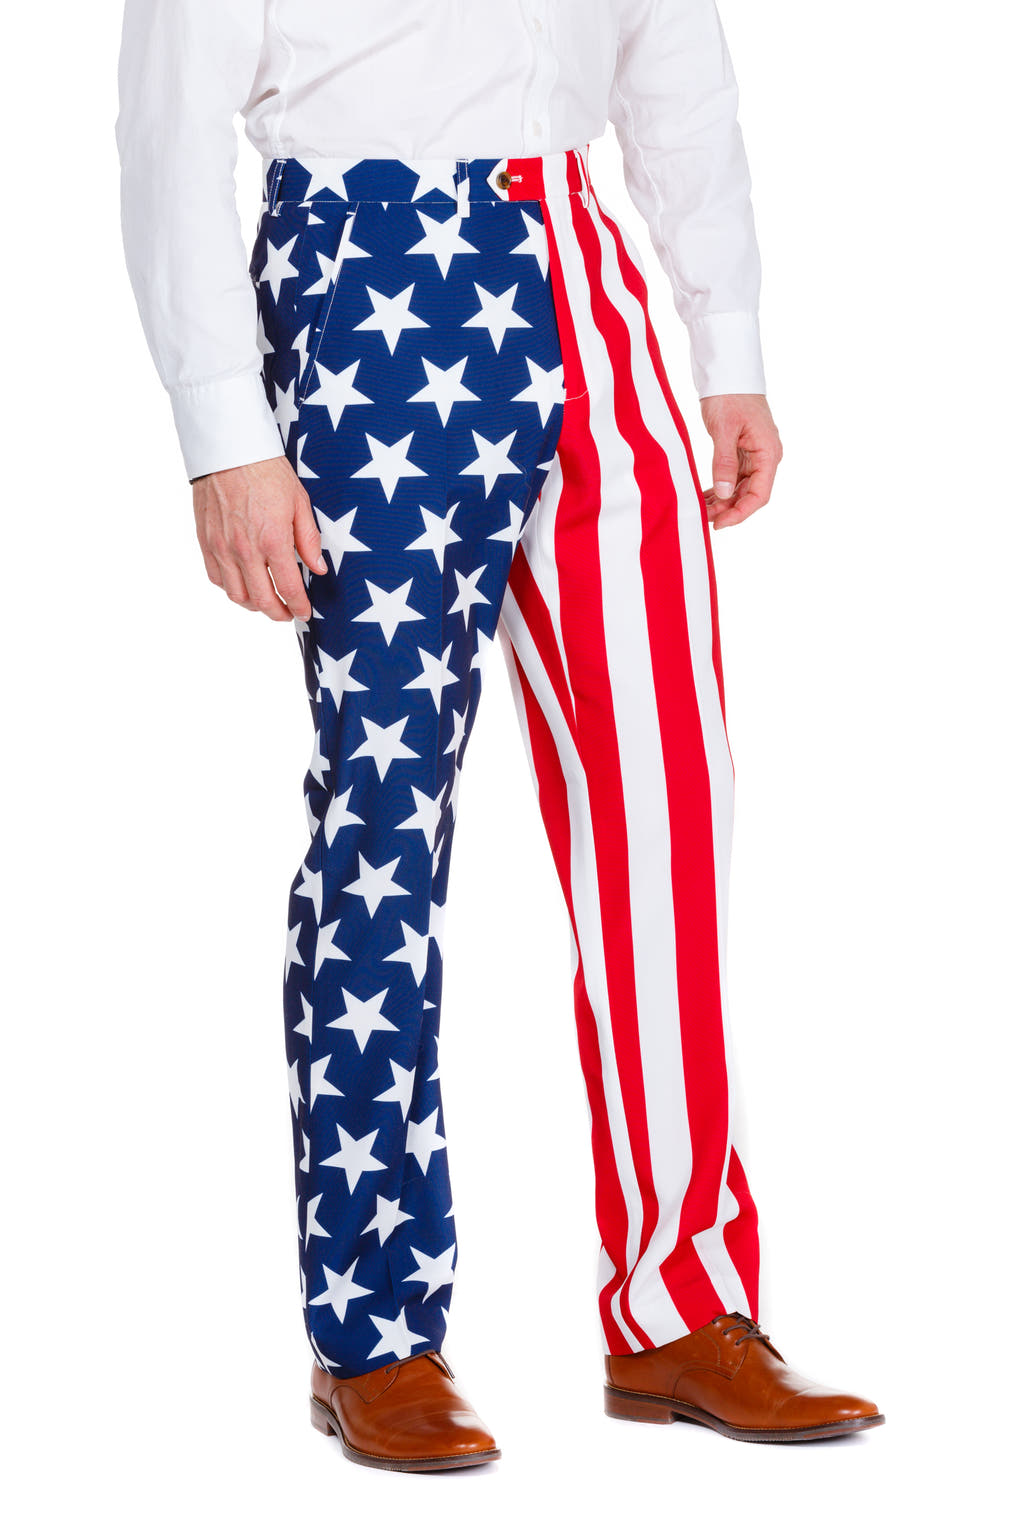 American Flag Suit Pants for Men